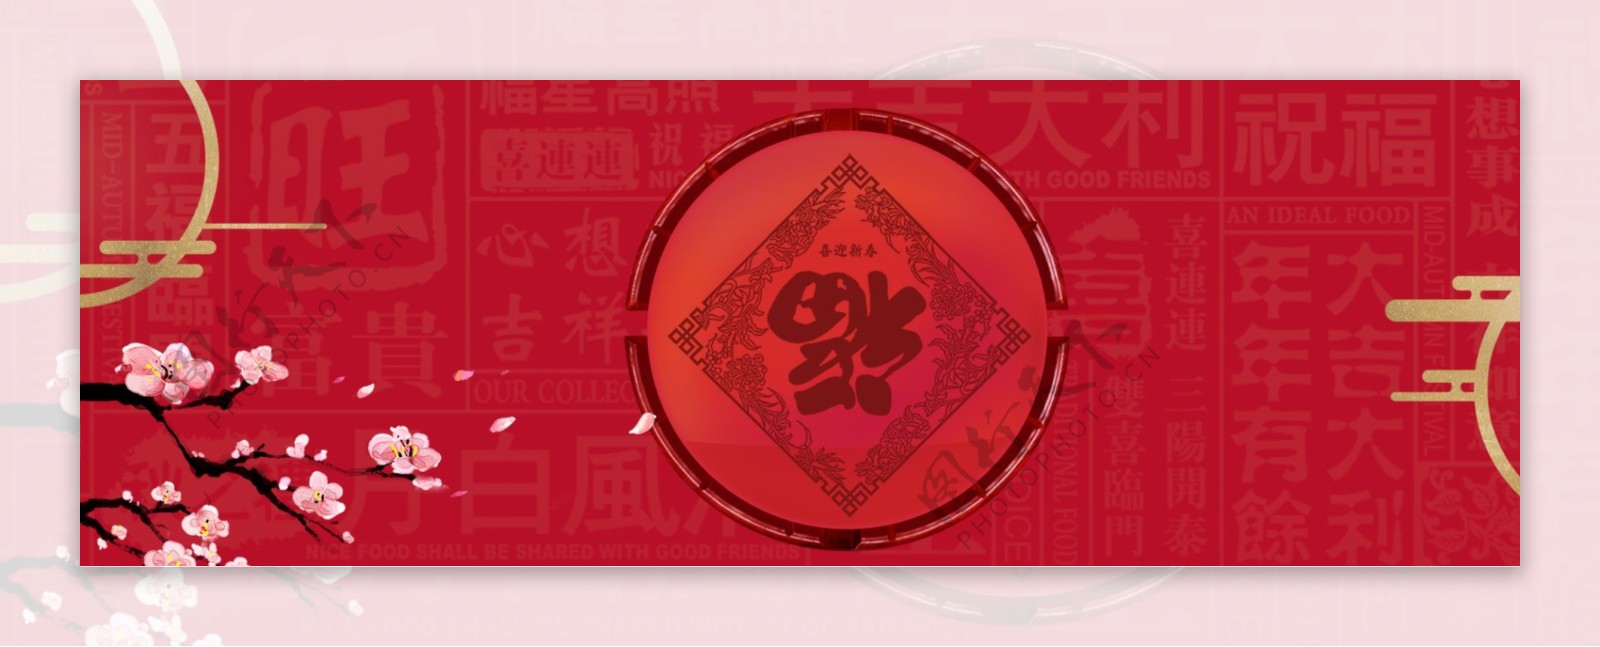 礼品年货节中国风新年节日banner背景